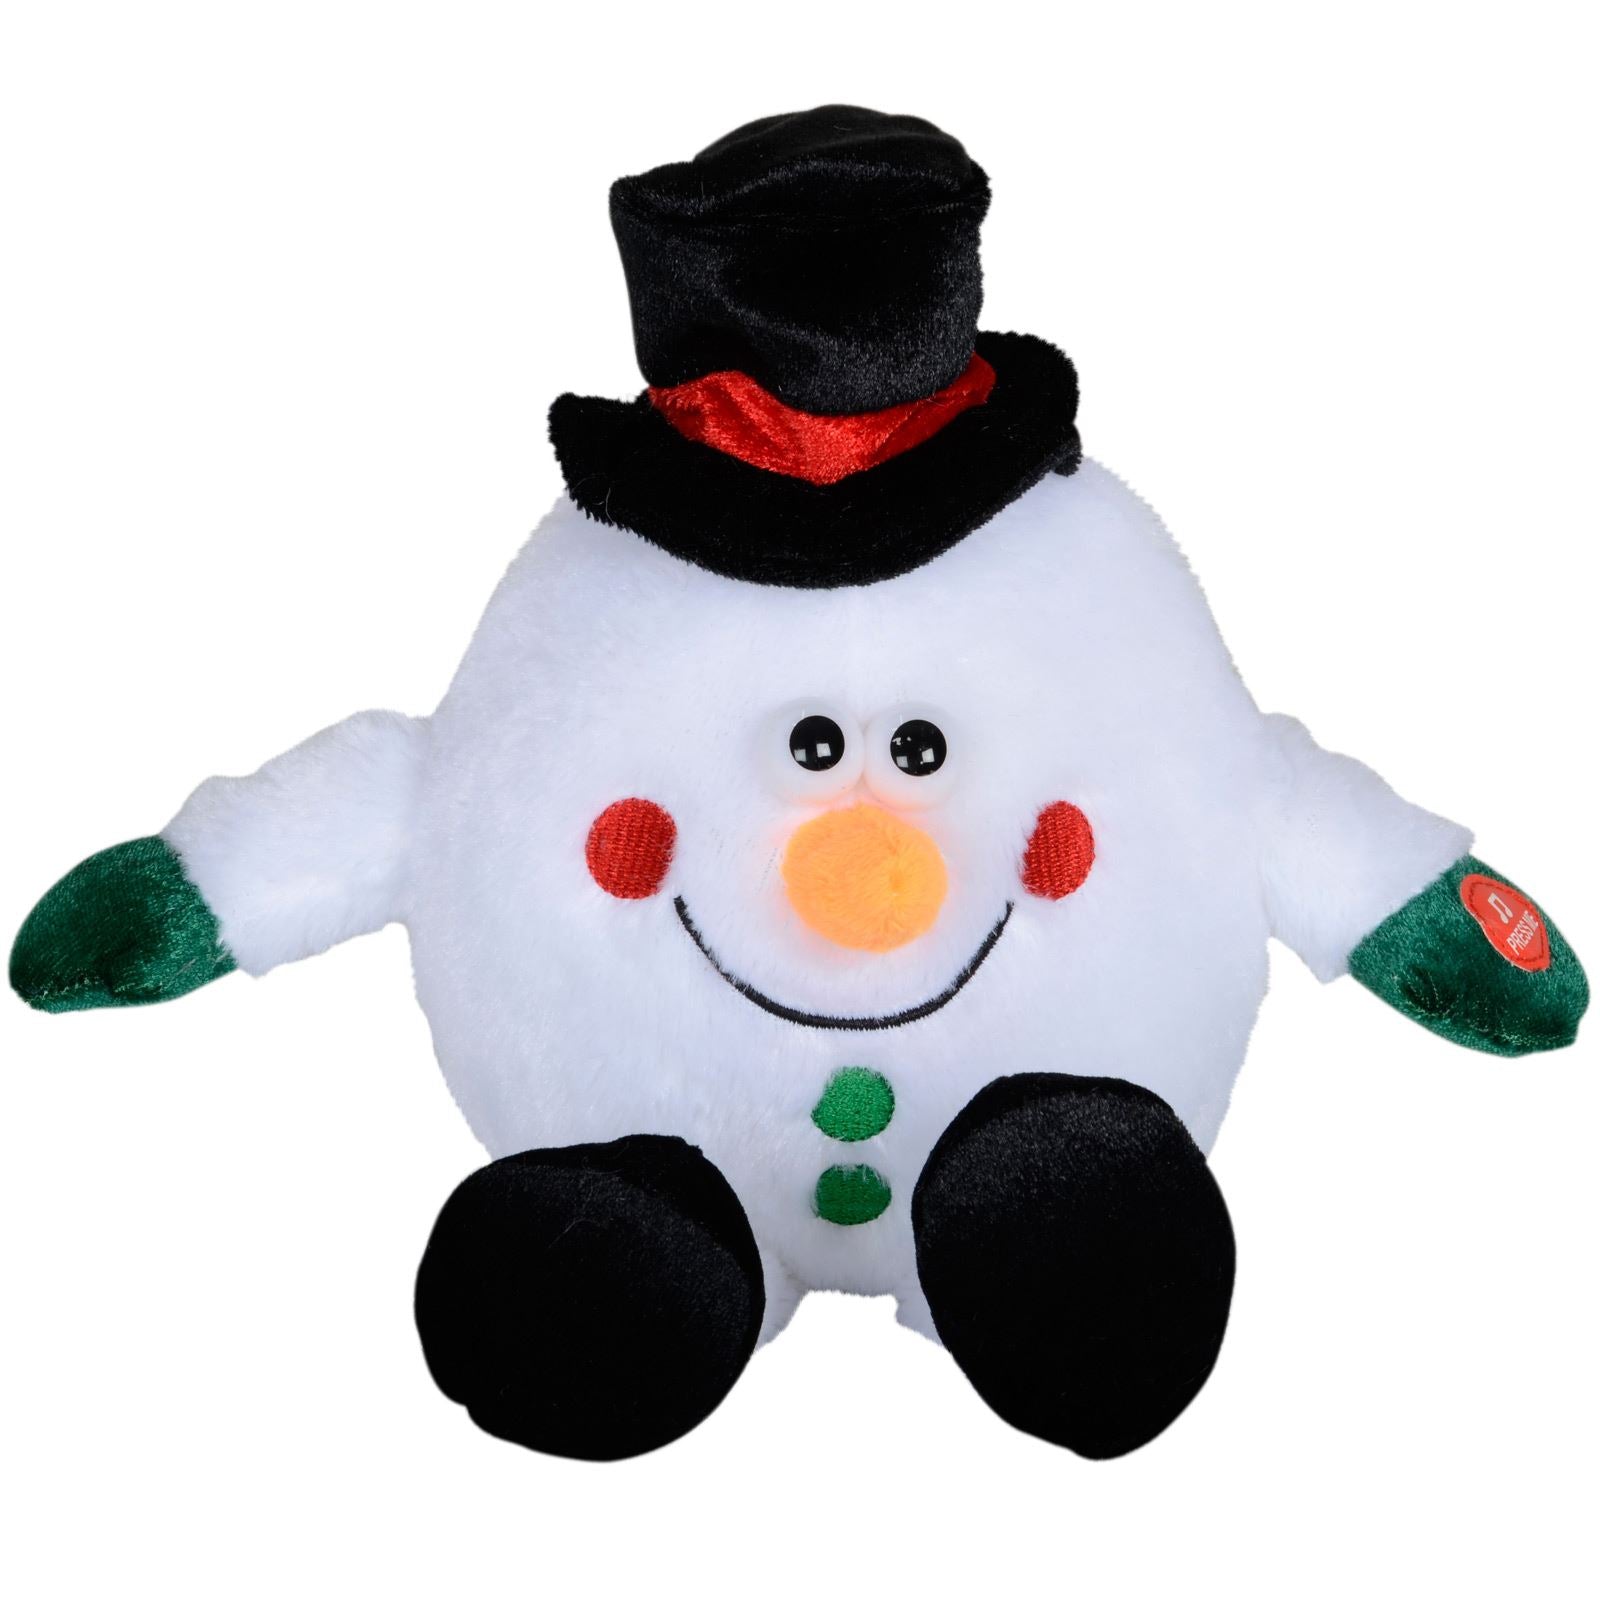 Mr Crimbo 7" Musical Laughing Santa Snowman Decoration - MrCrimbo.co.uk -XS3553 - Snowman -christmas decoration